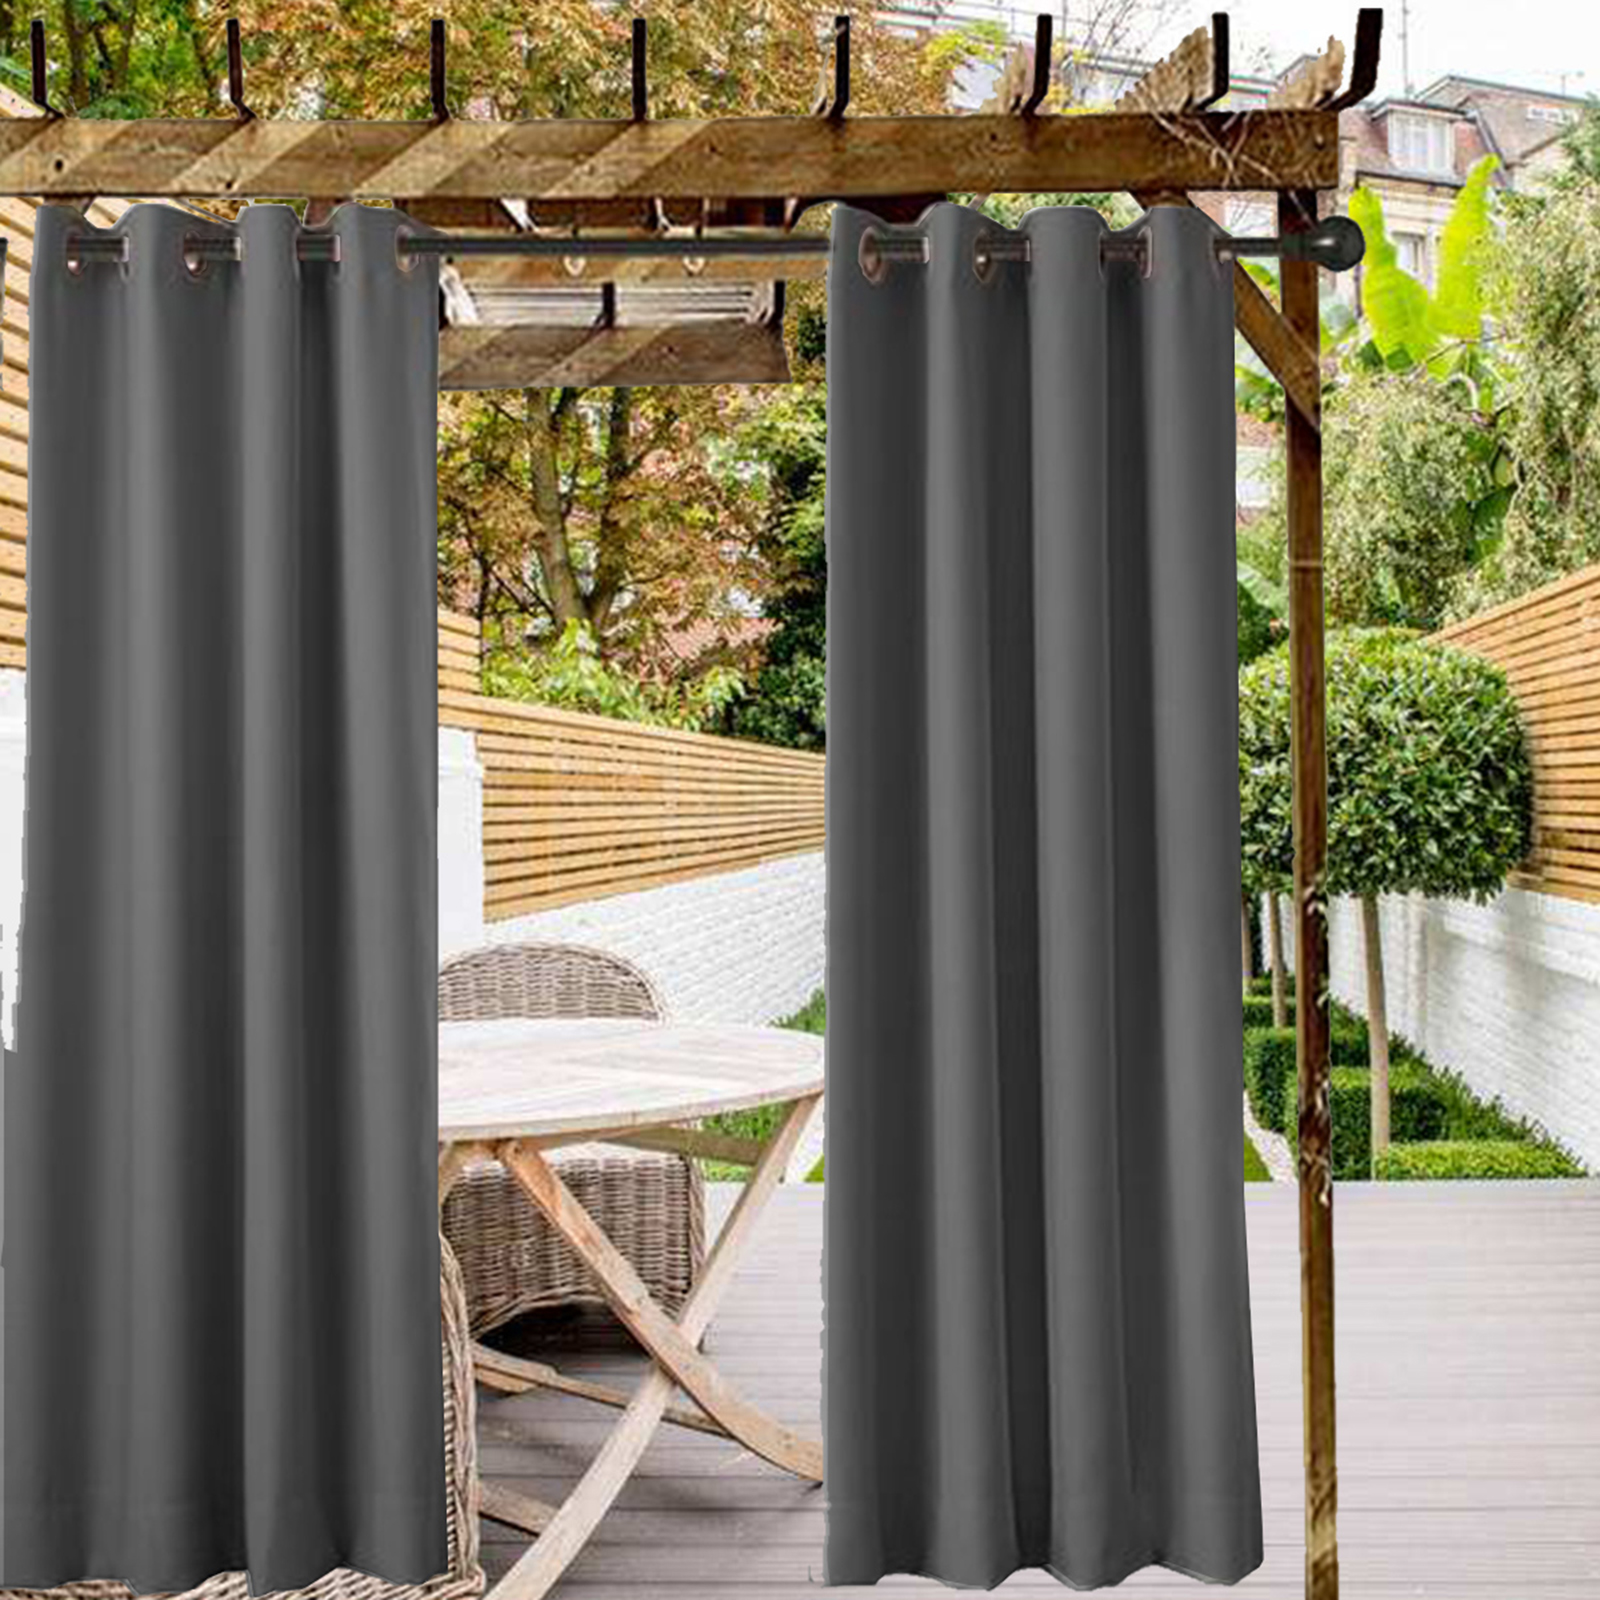 2Pcs Outdoor Patio Pergola Curtains Blackout Privacy Protection Grommet Drapes 